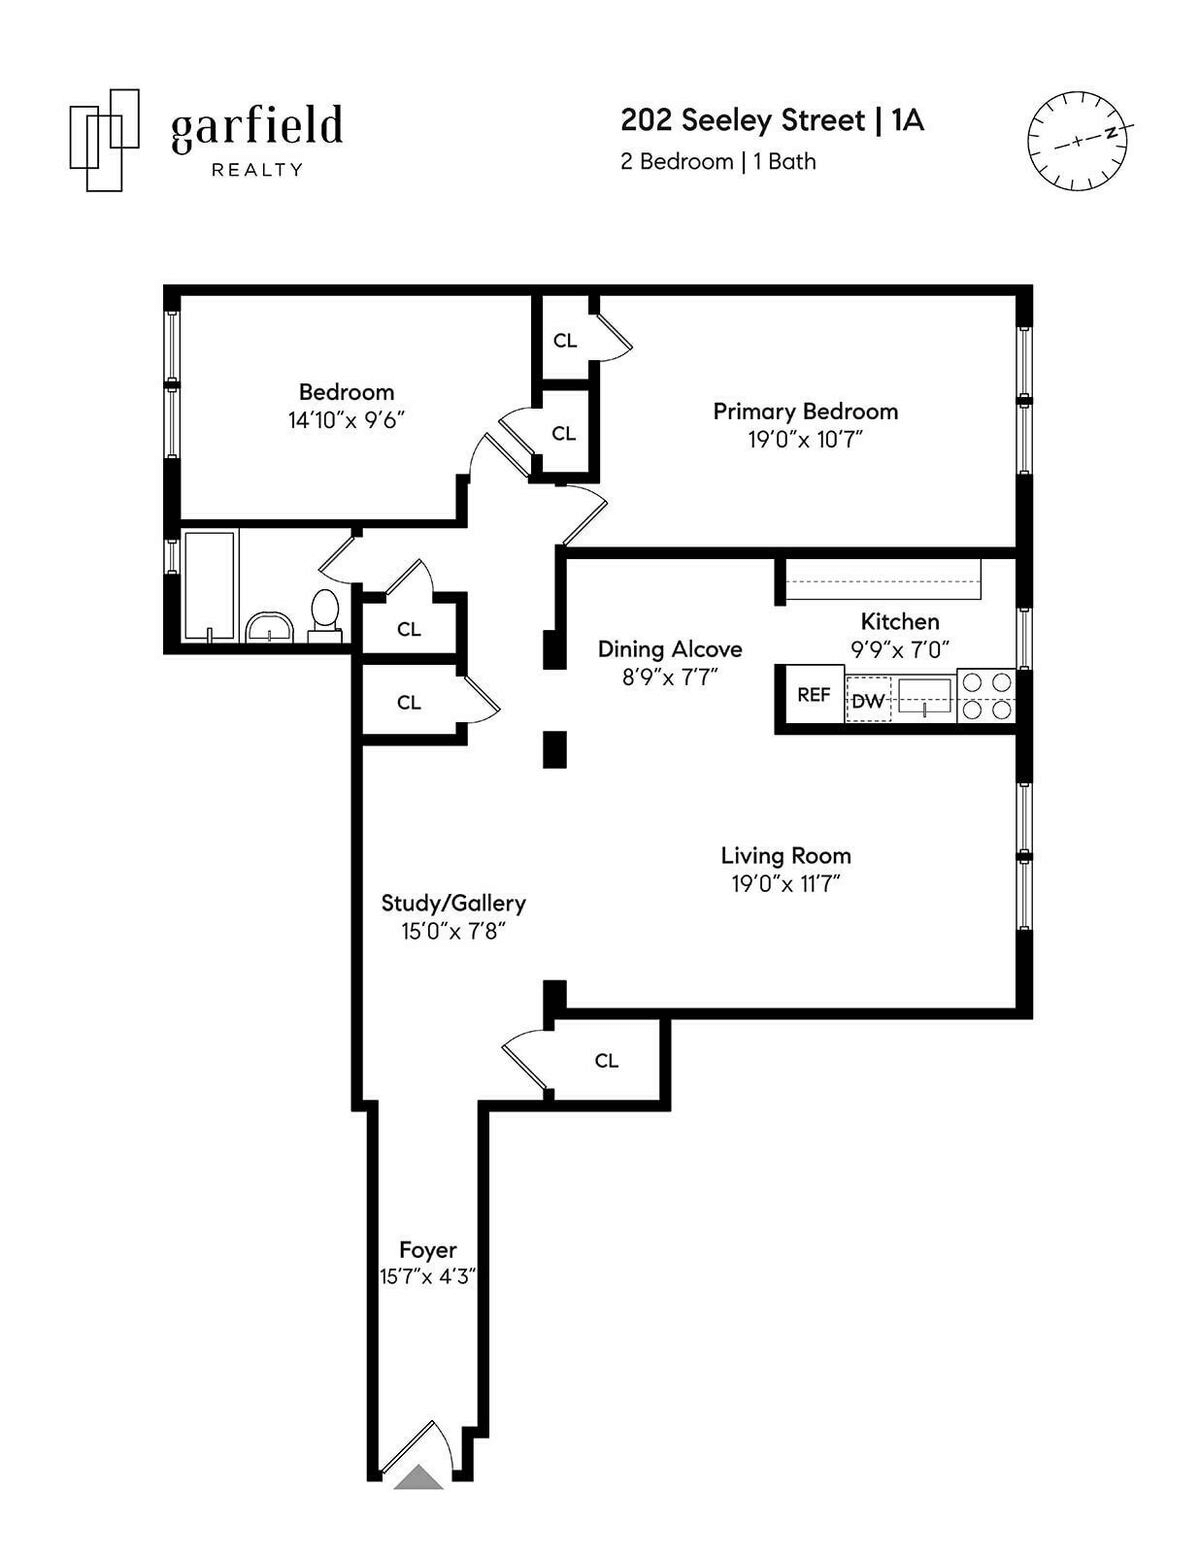 floorplan of unit 1a in 202 seeley street